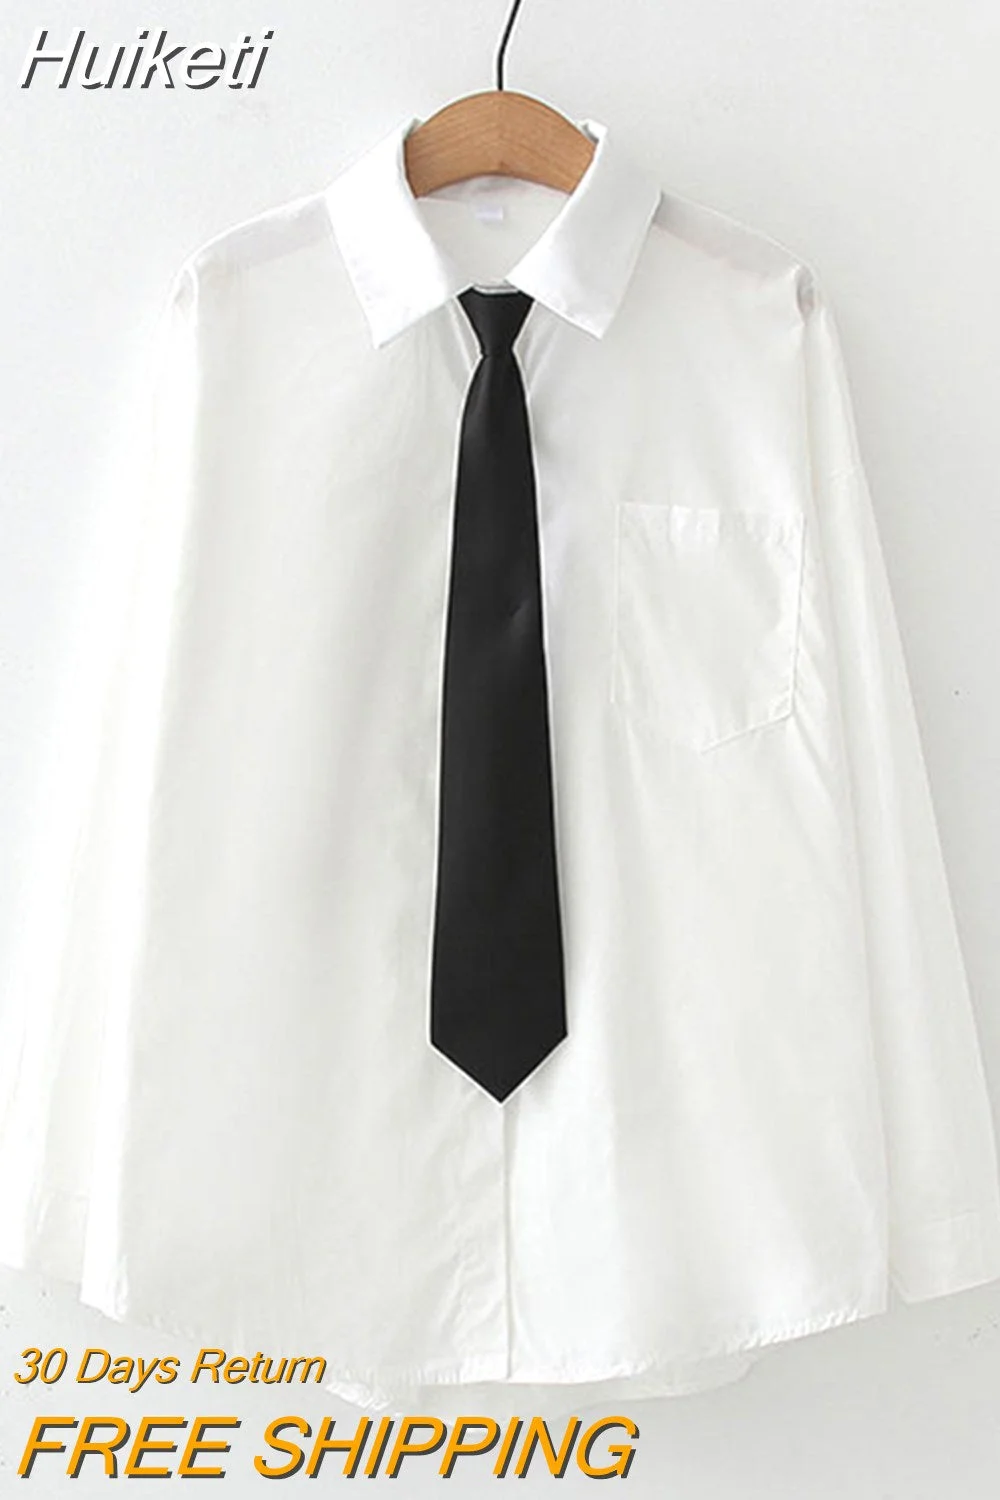 Huiketi Jk Women White Shirts Long Sleeve Fall Student Shirts Casual Button Up Japan Black Tie Preppy Style Girls Tops New